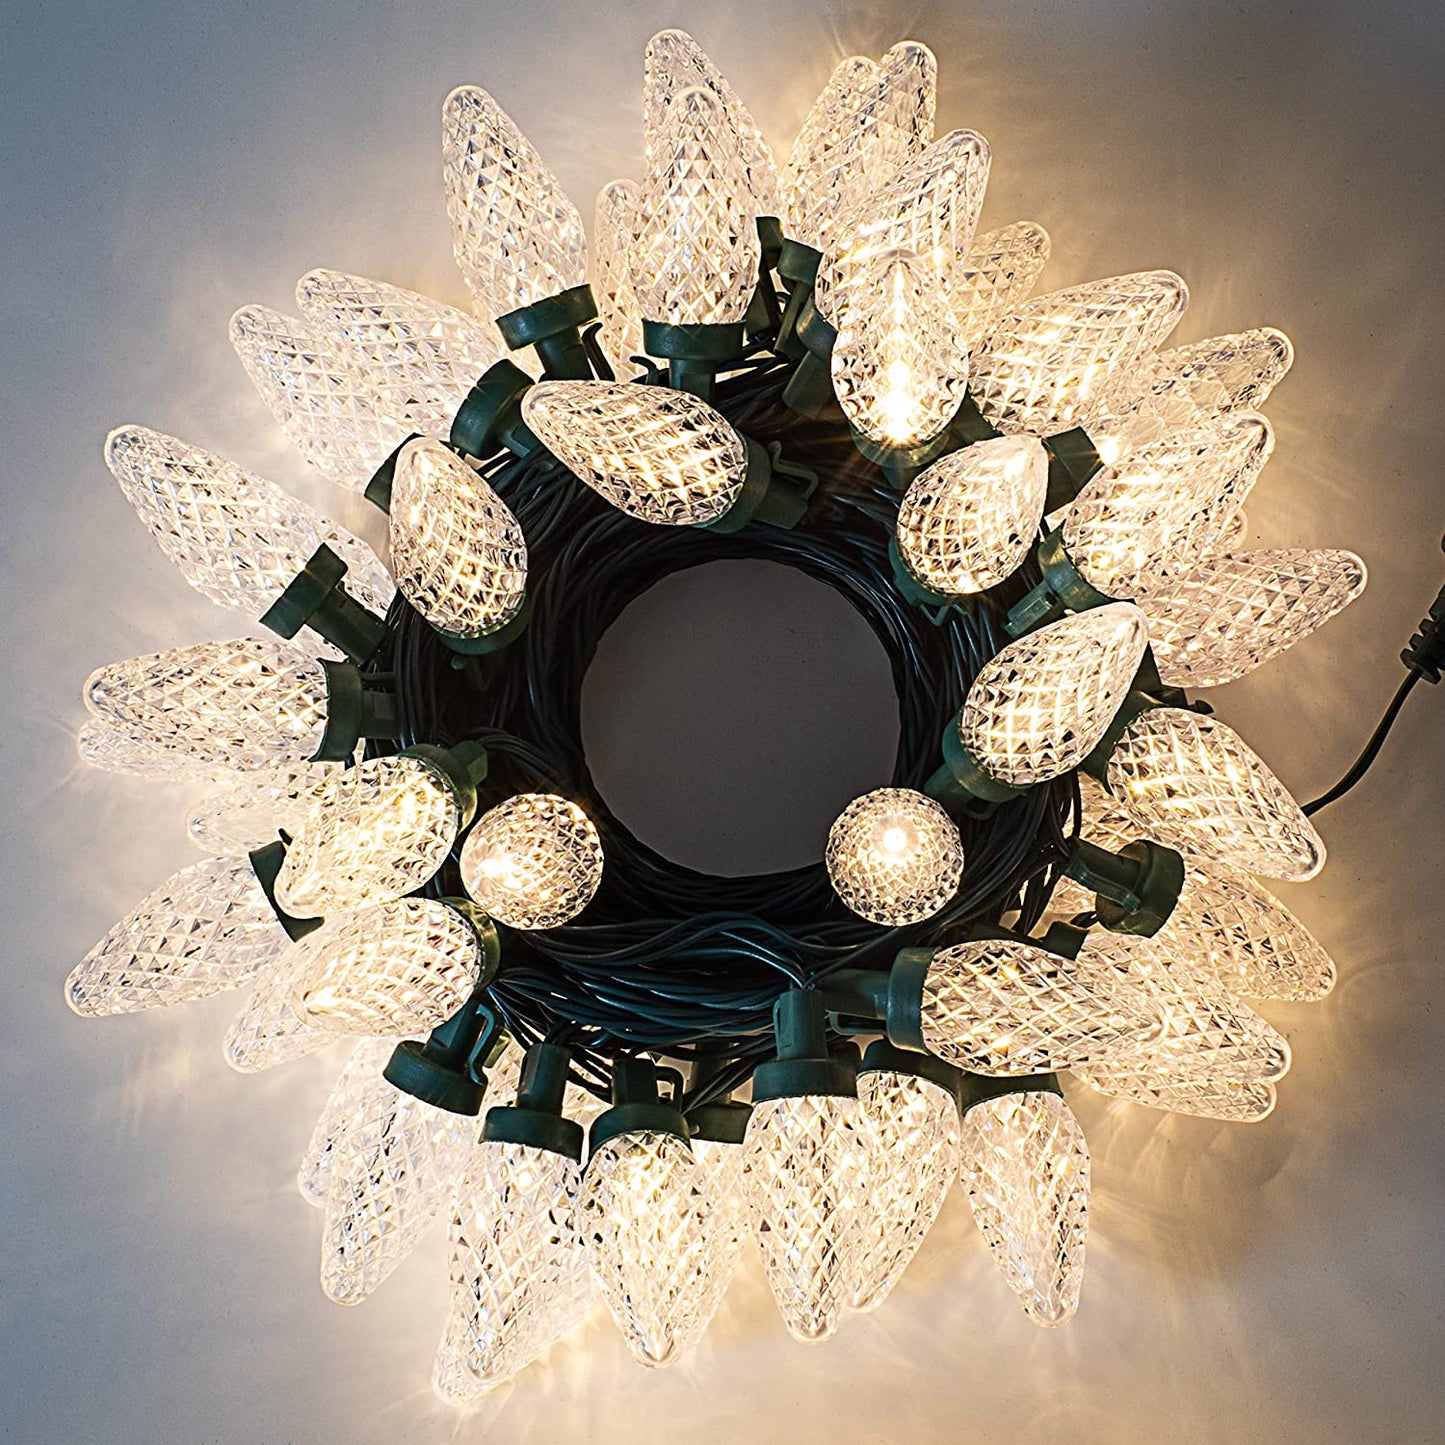 50 LED C9 Christmas String Lights Warm White